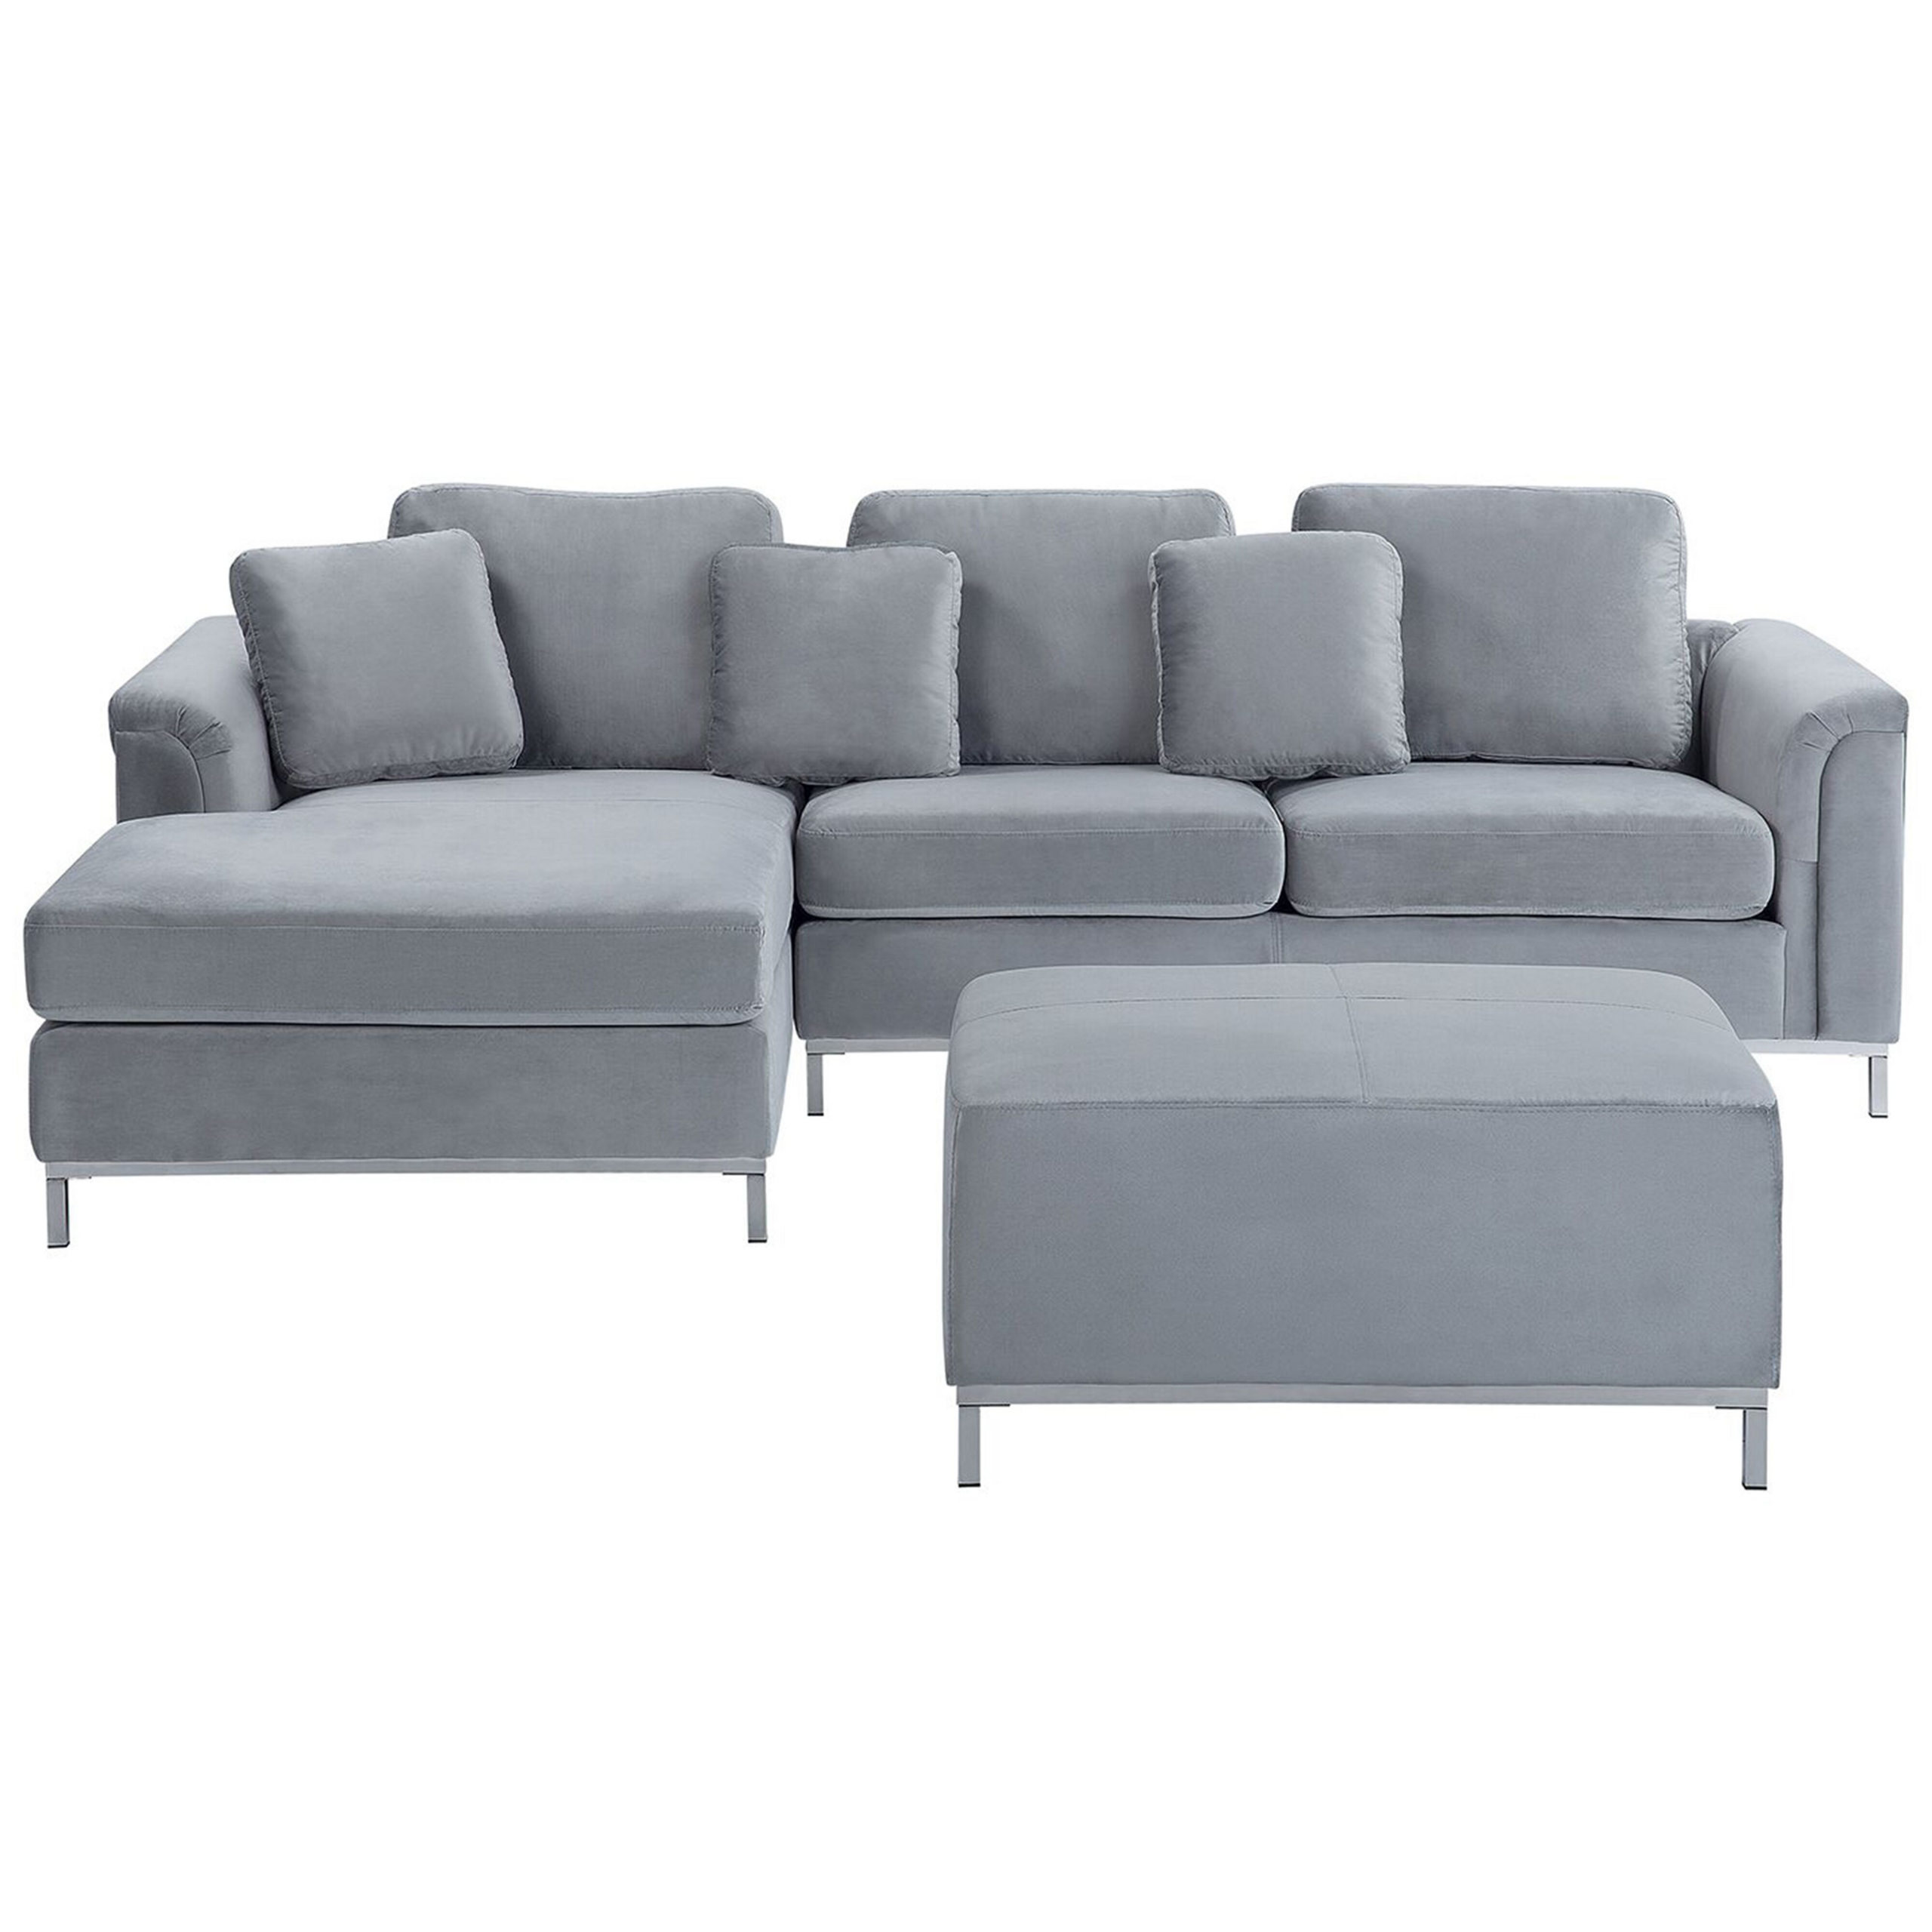 Beliani Corner Sofa Light Grey Velvet Upholstered with Ottoman L-shaped Right Hand Orientation